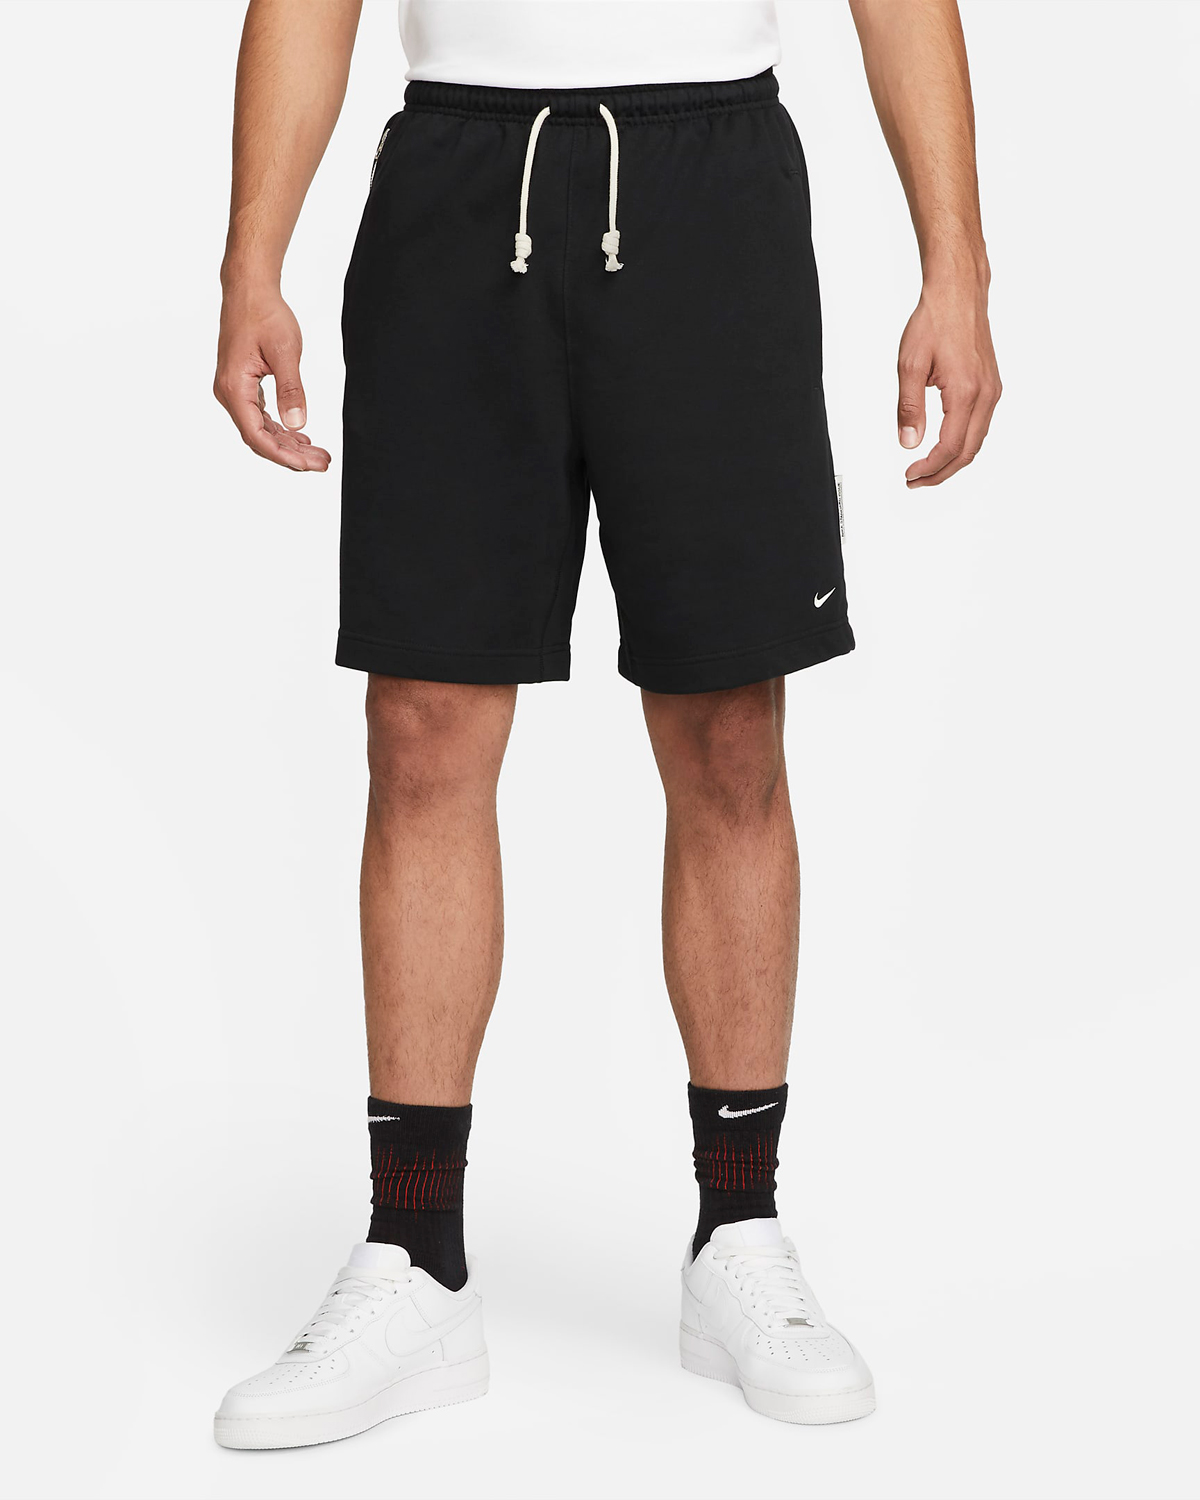 Nike-Standard-Issue-Shorts-Black